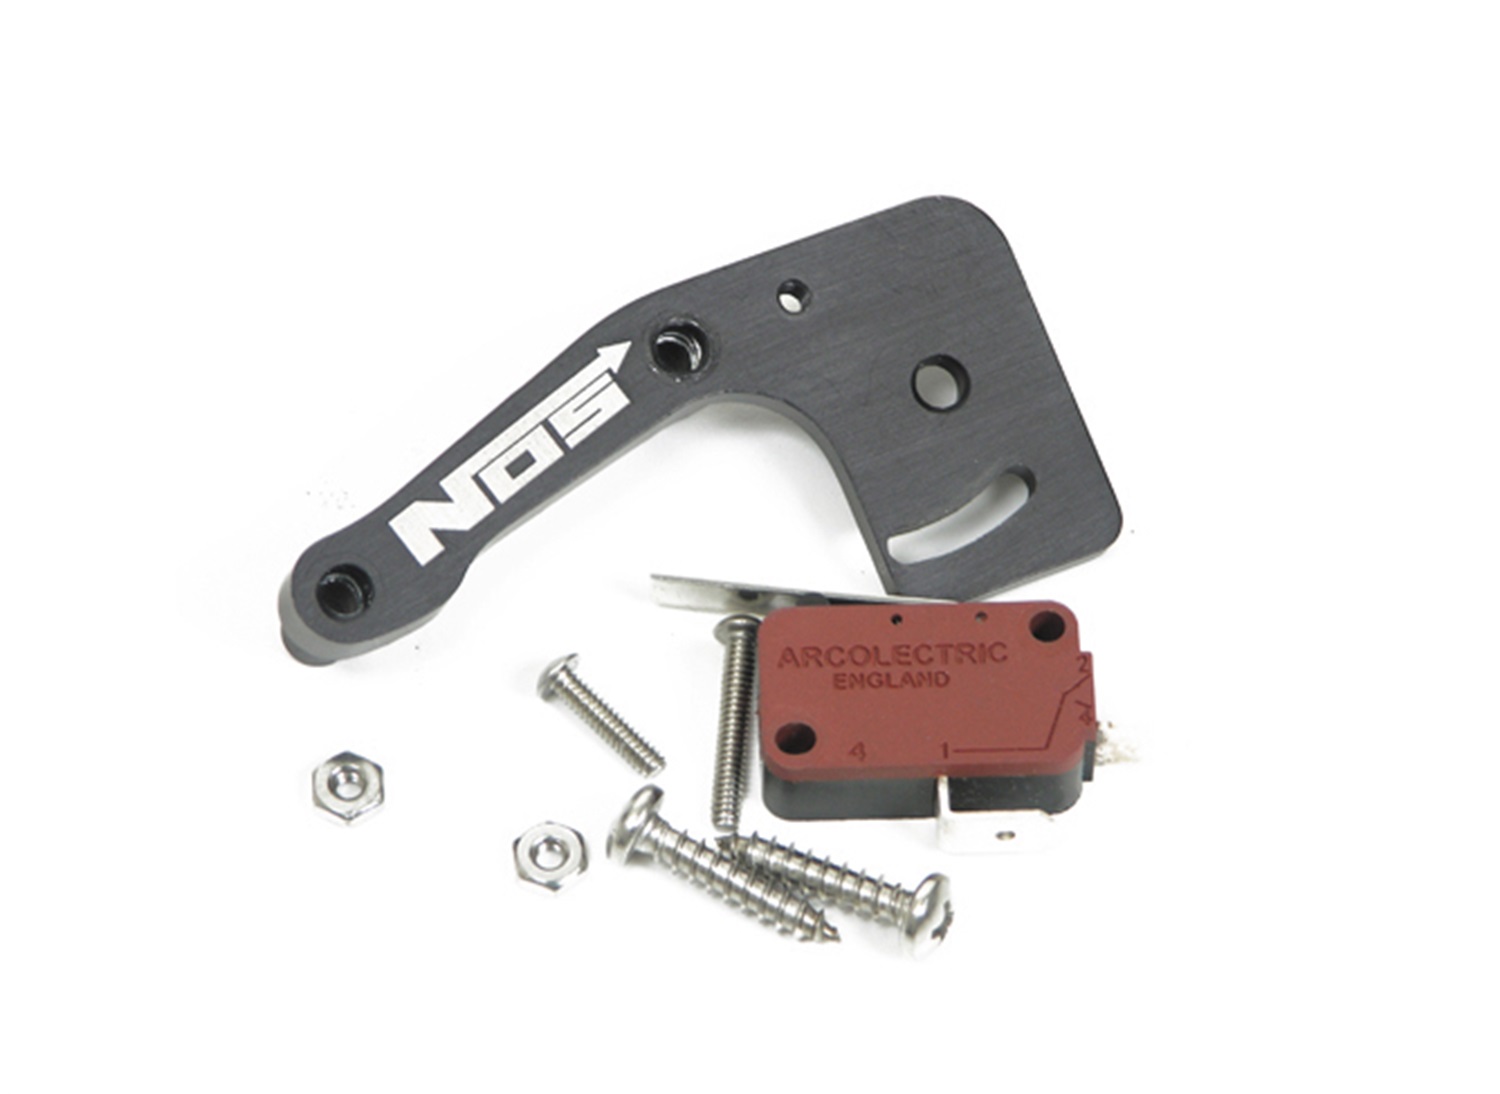 Nitrous Oxide Micro Switch Bracket, NOS NOS Accessories, 4150 BILLET MICROSWITCH BRACKET KIT